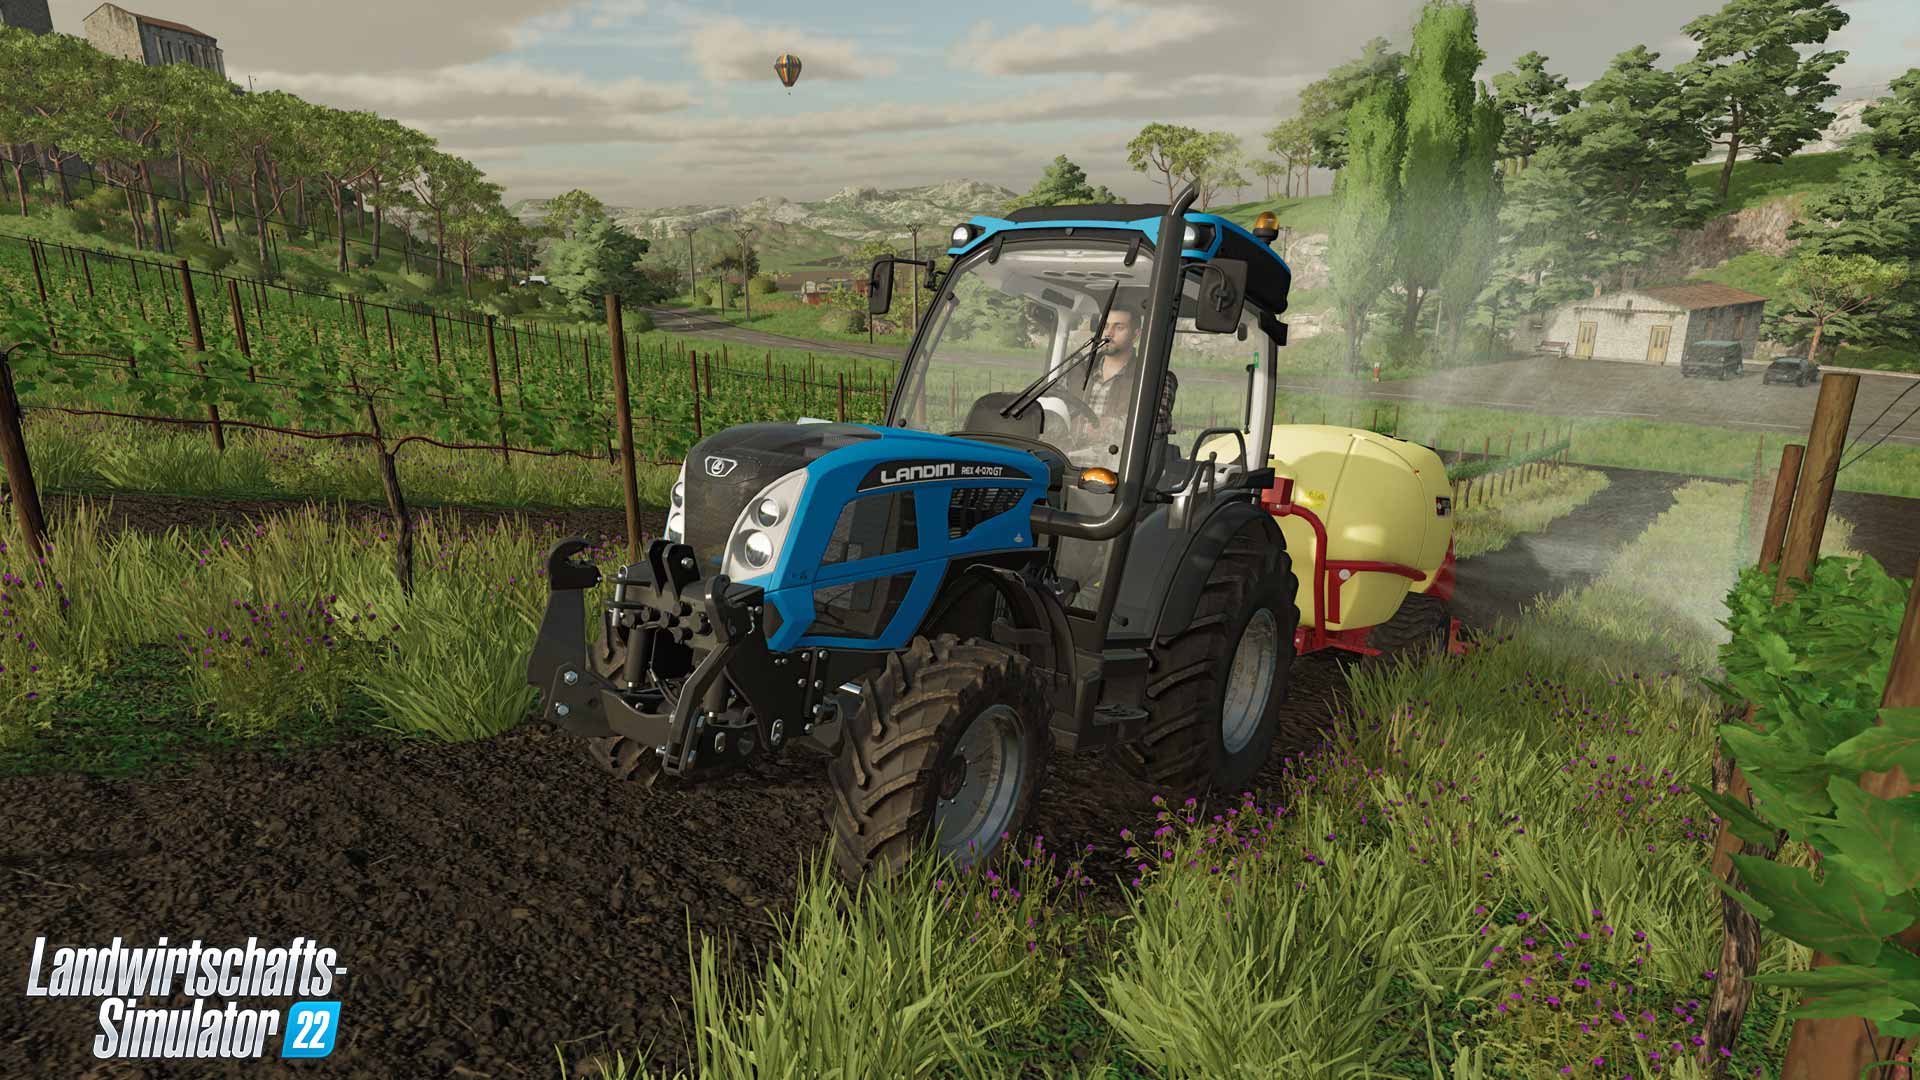 Featured image for “Landwirtschafts-Simulator 22 (Giants Software)”